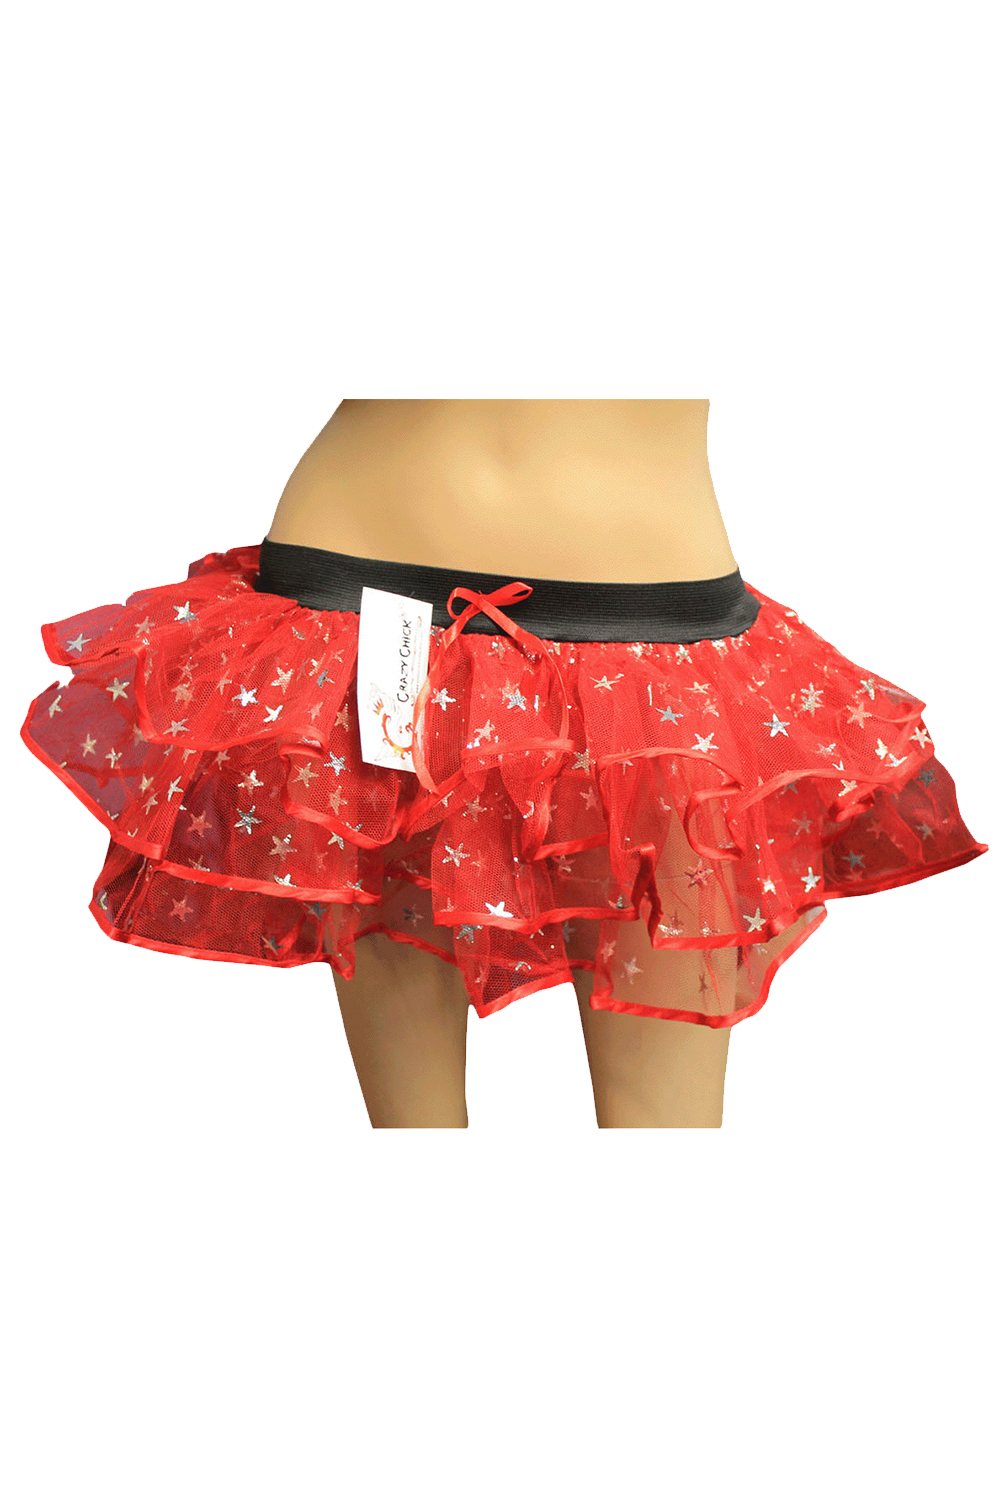 Crazy Chick Adult Star Red Burlesque Tutu Skirt